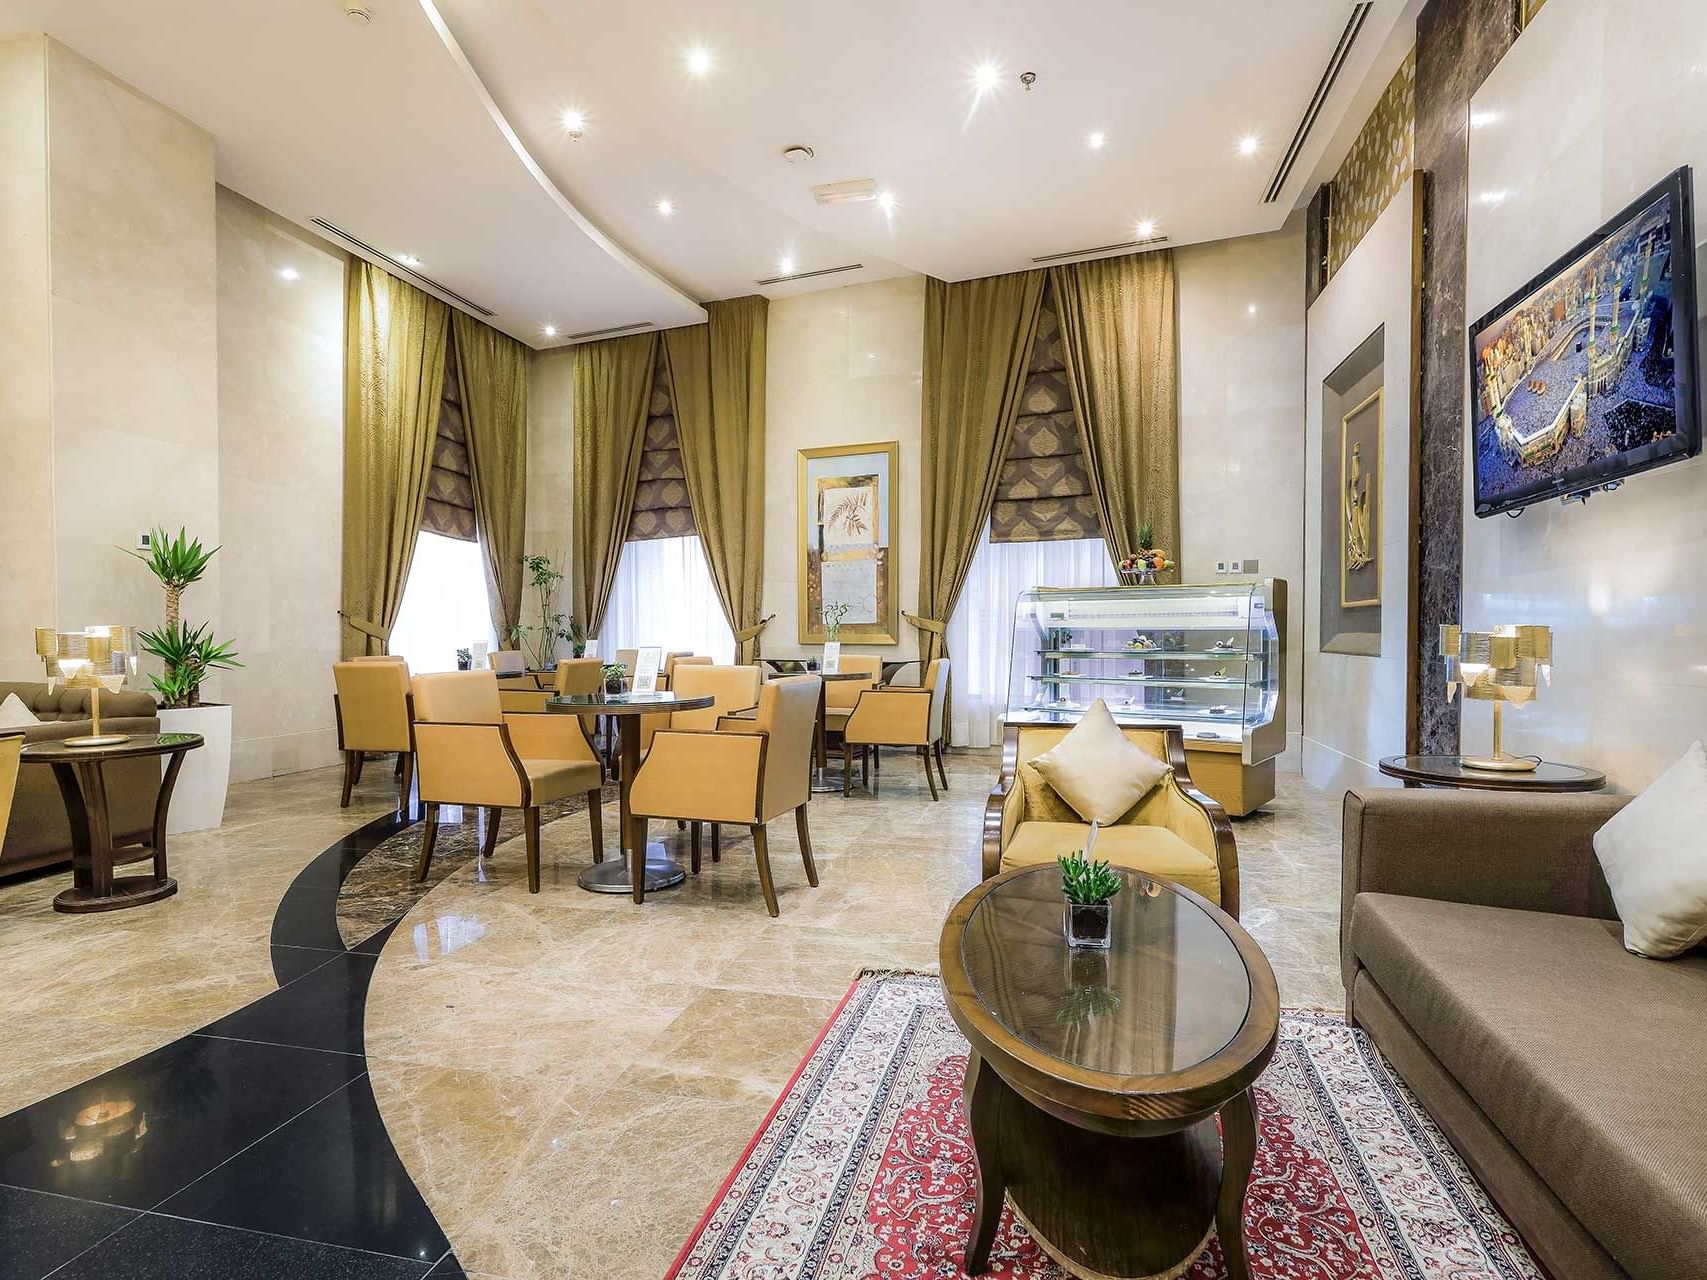 Dining area in Al Majlis Restaurant at Elaf Kinda Hotel